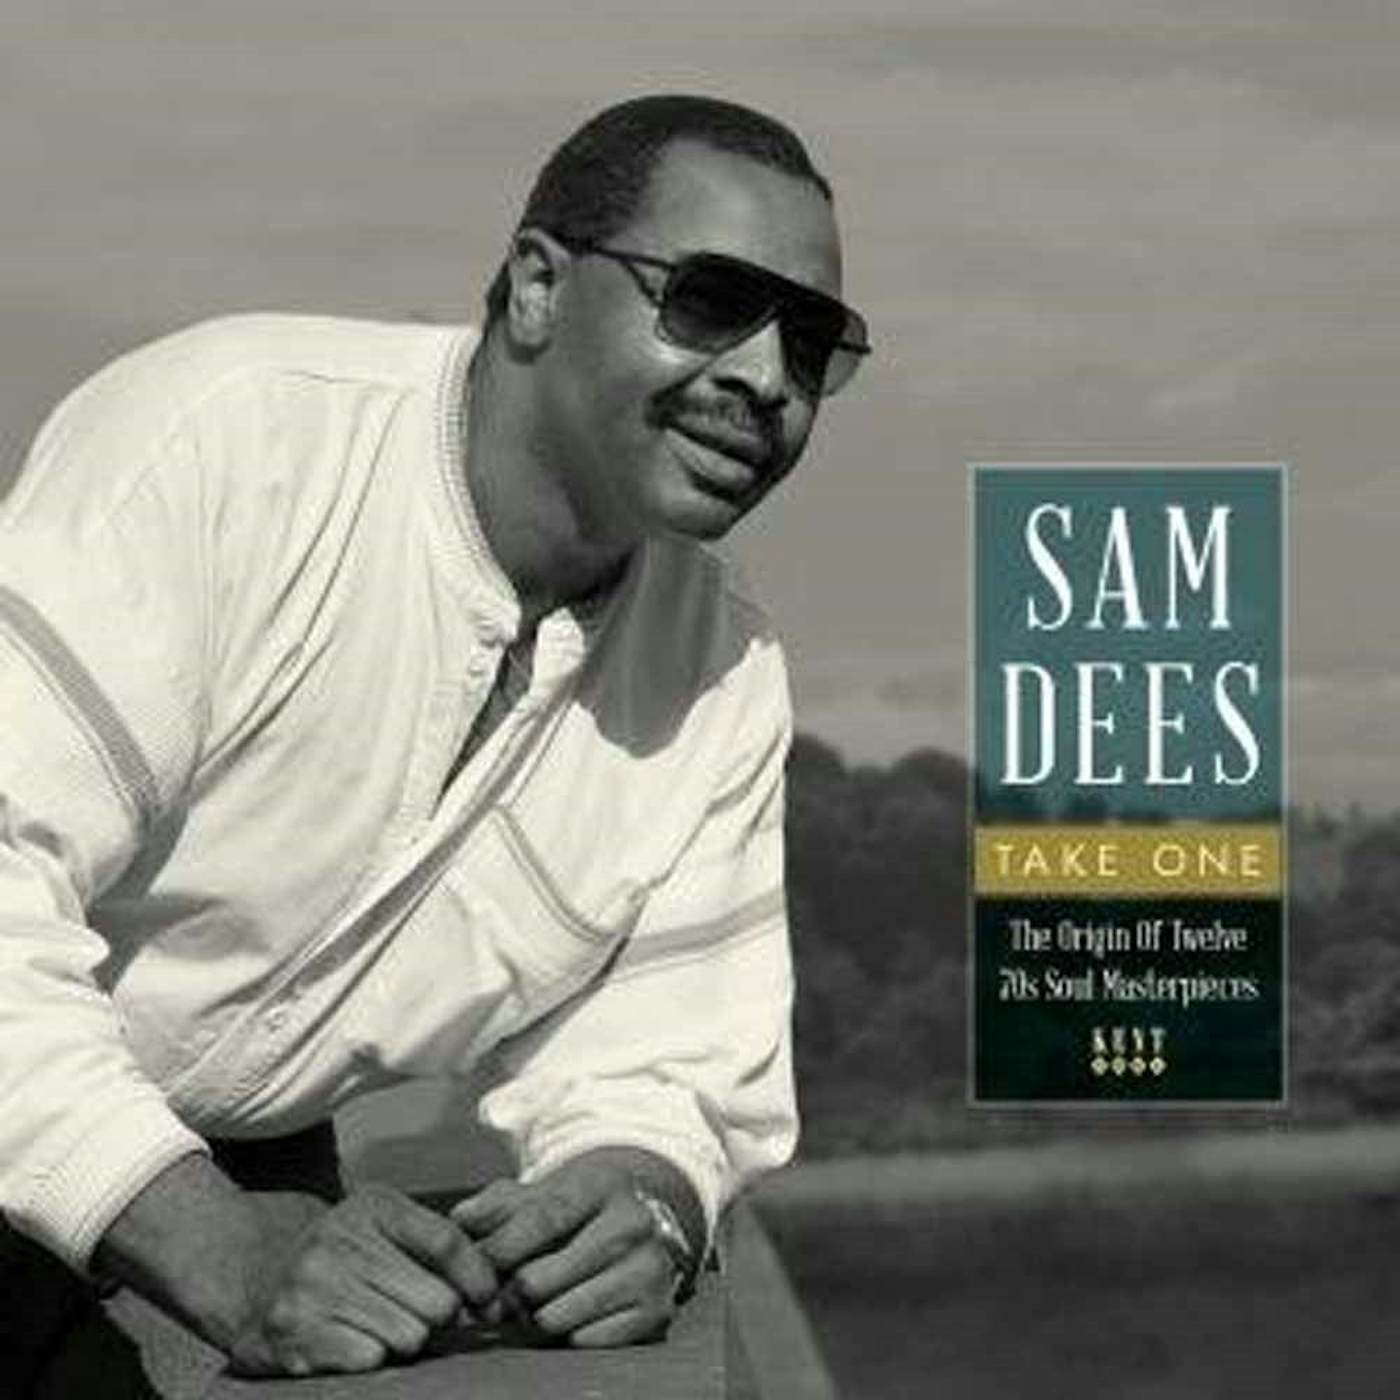 Sam Dees LP - Take One (Vinyl)